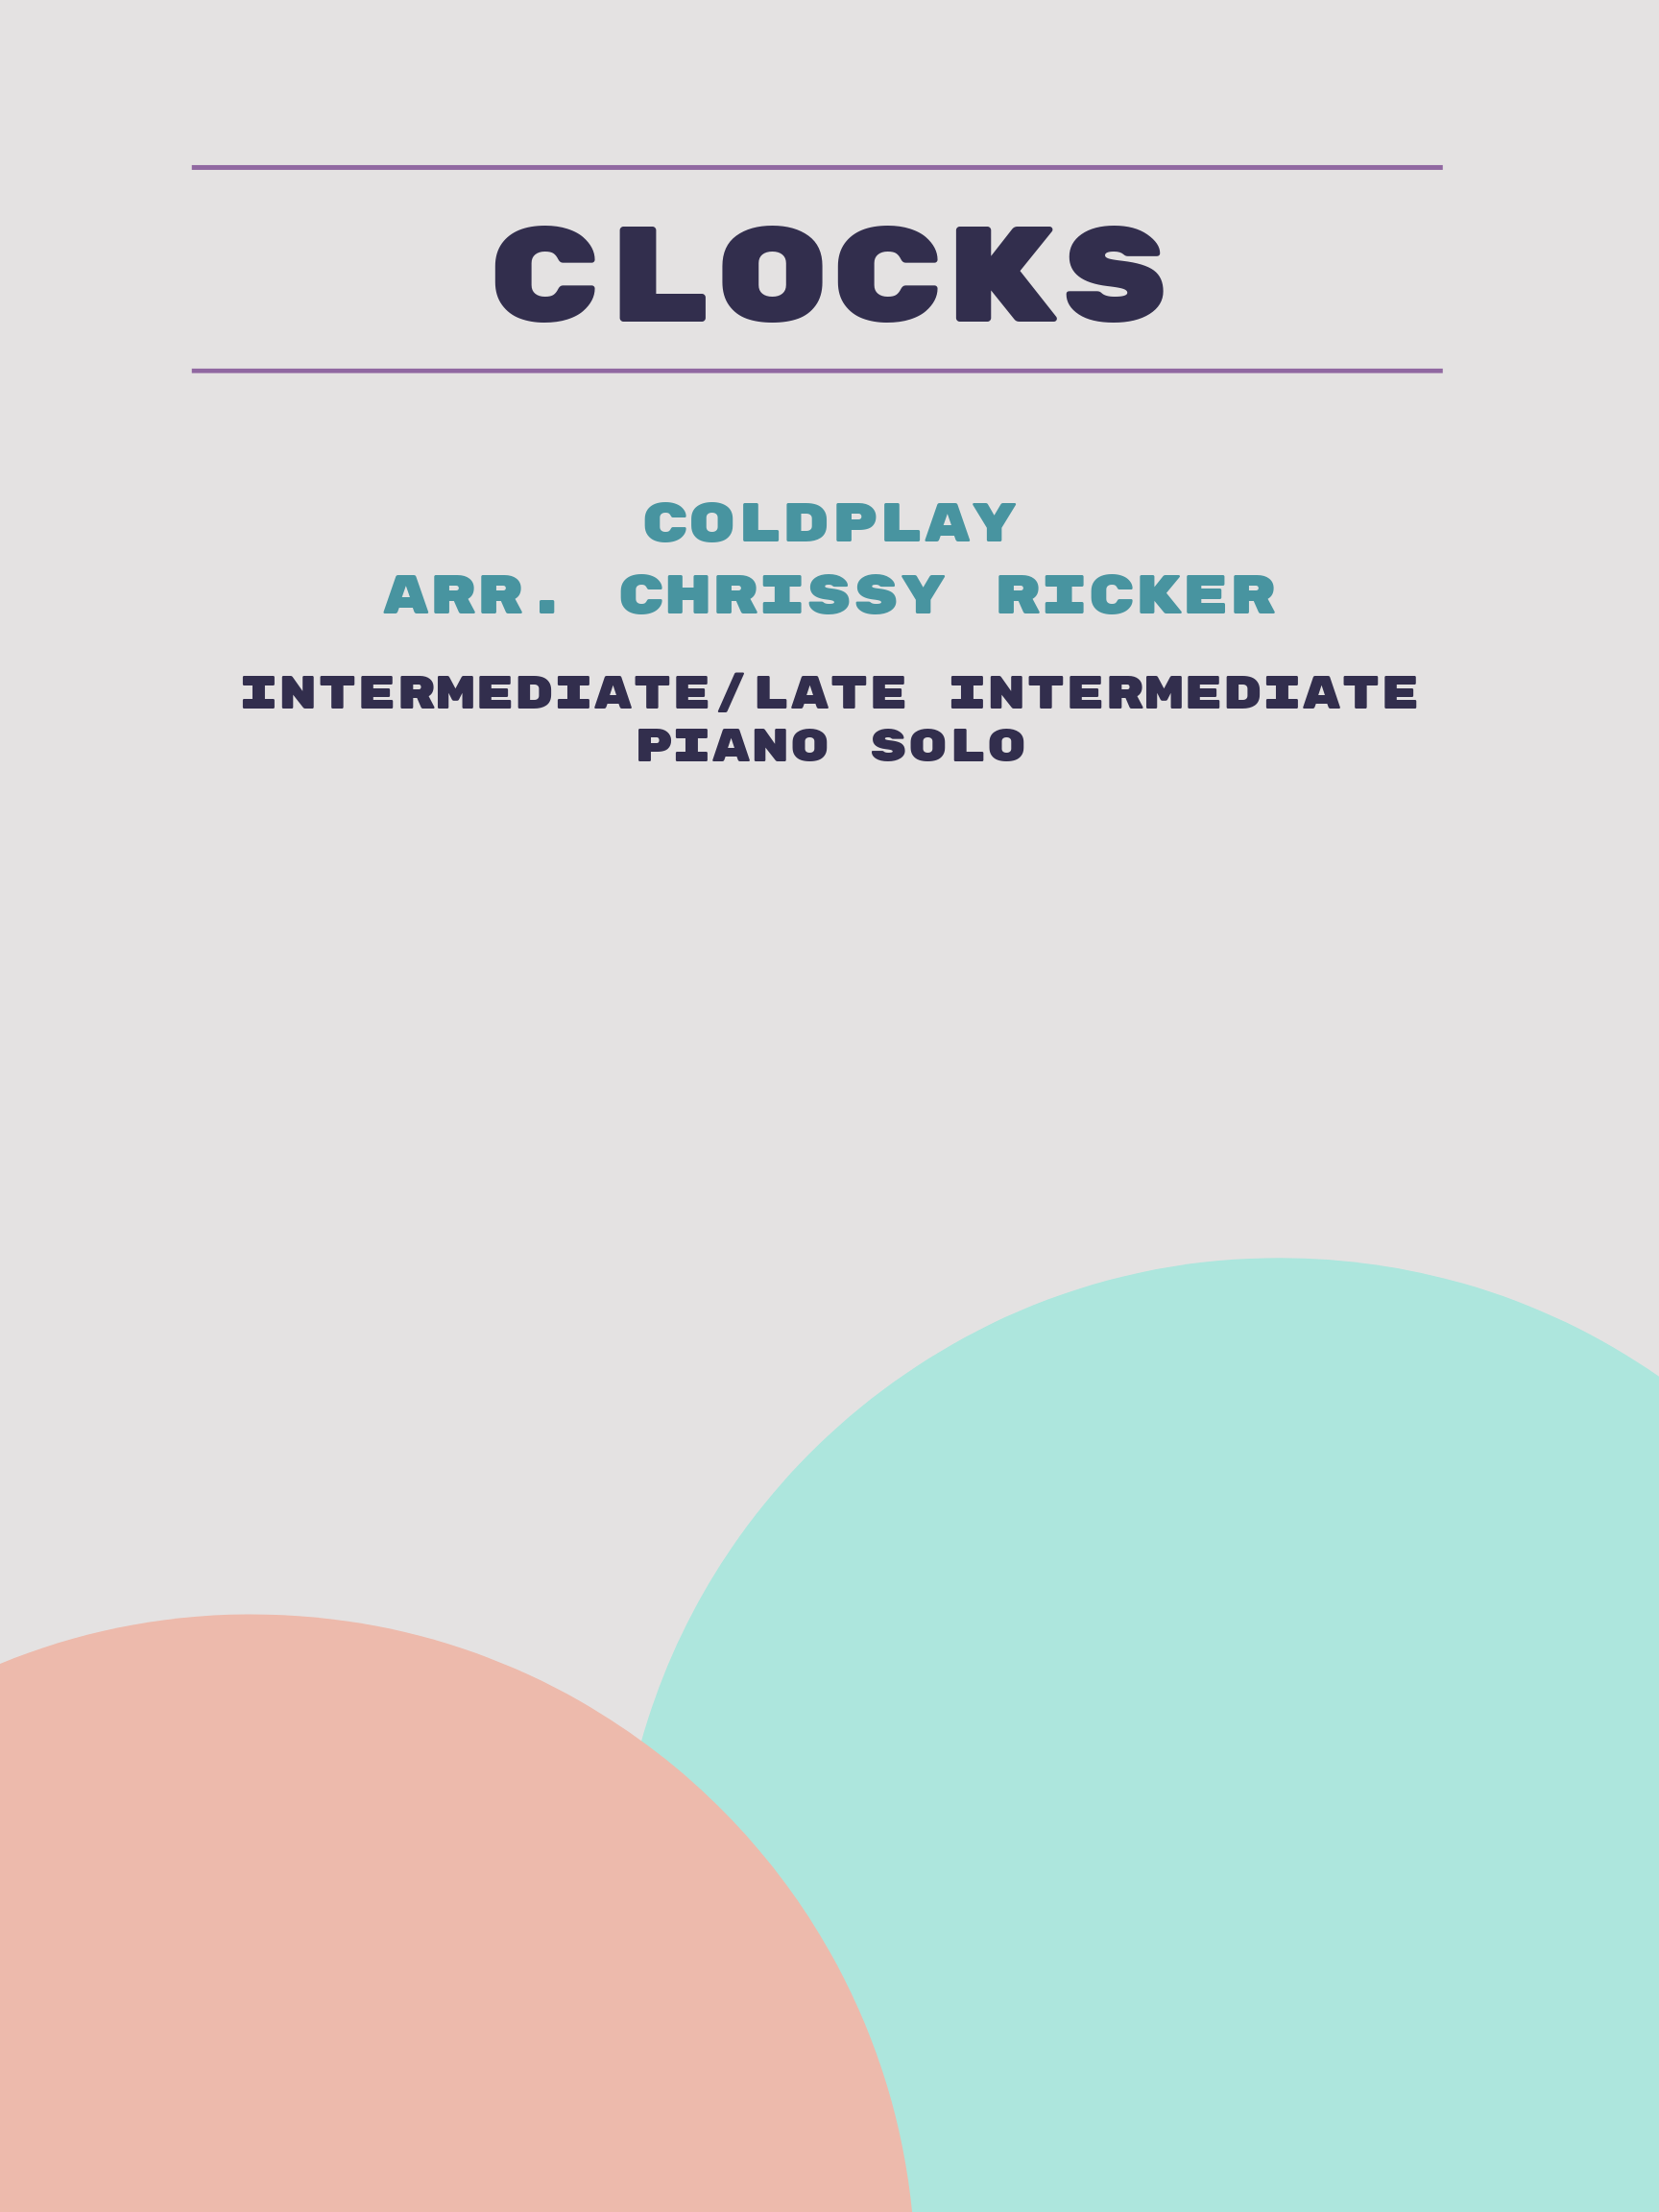 Clocks by Coldplay